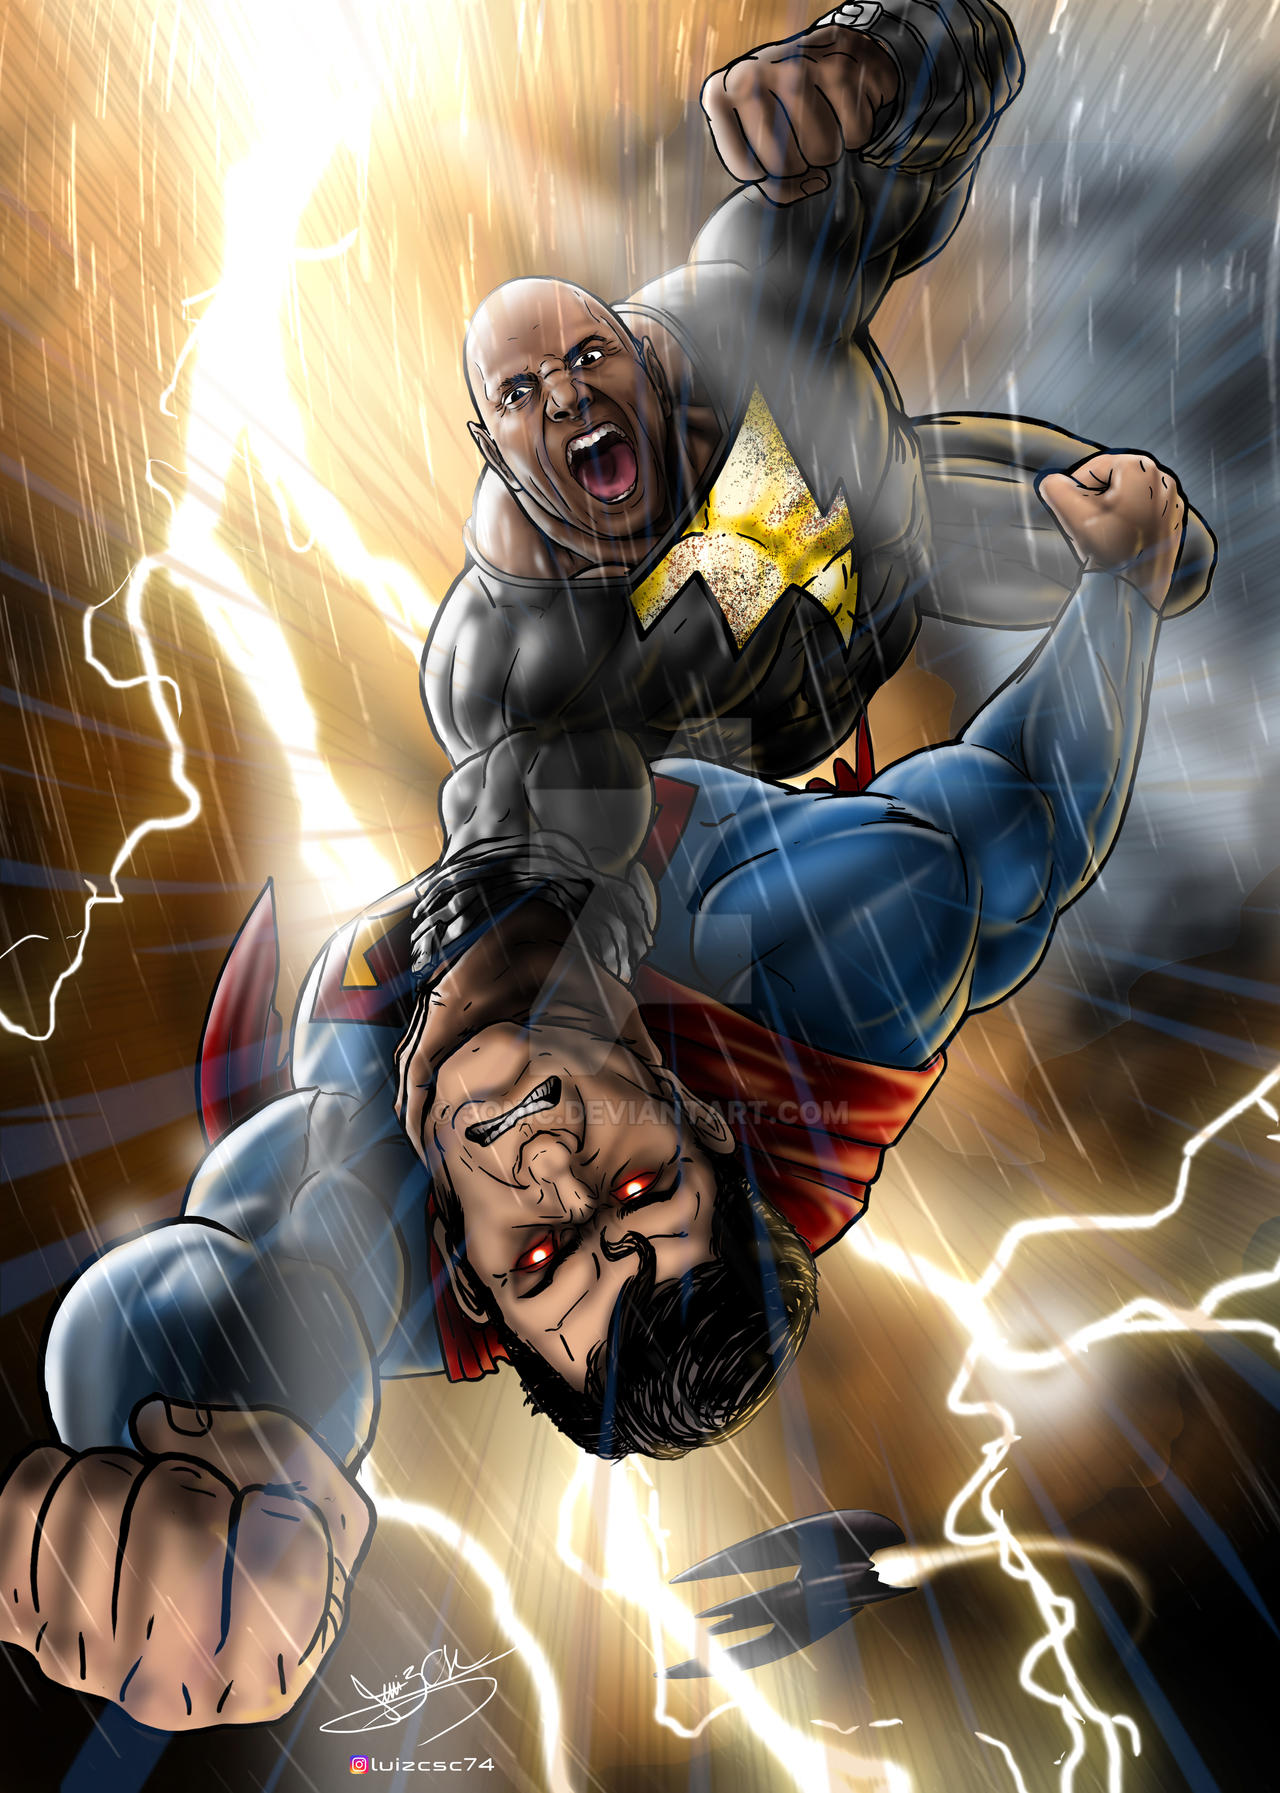 Black Adam vs Superman by dragonkid17 on DeviantArt